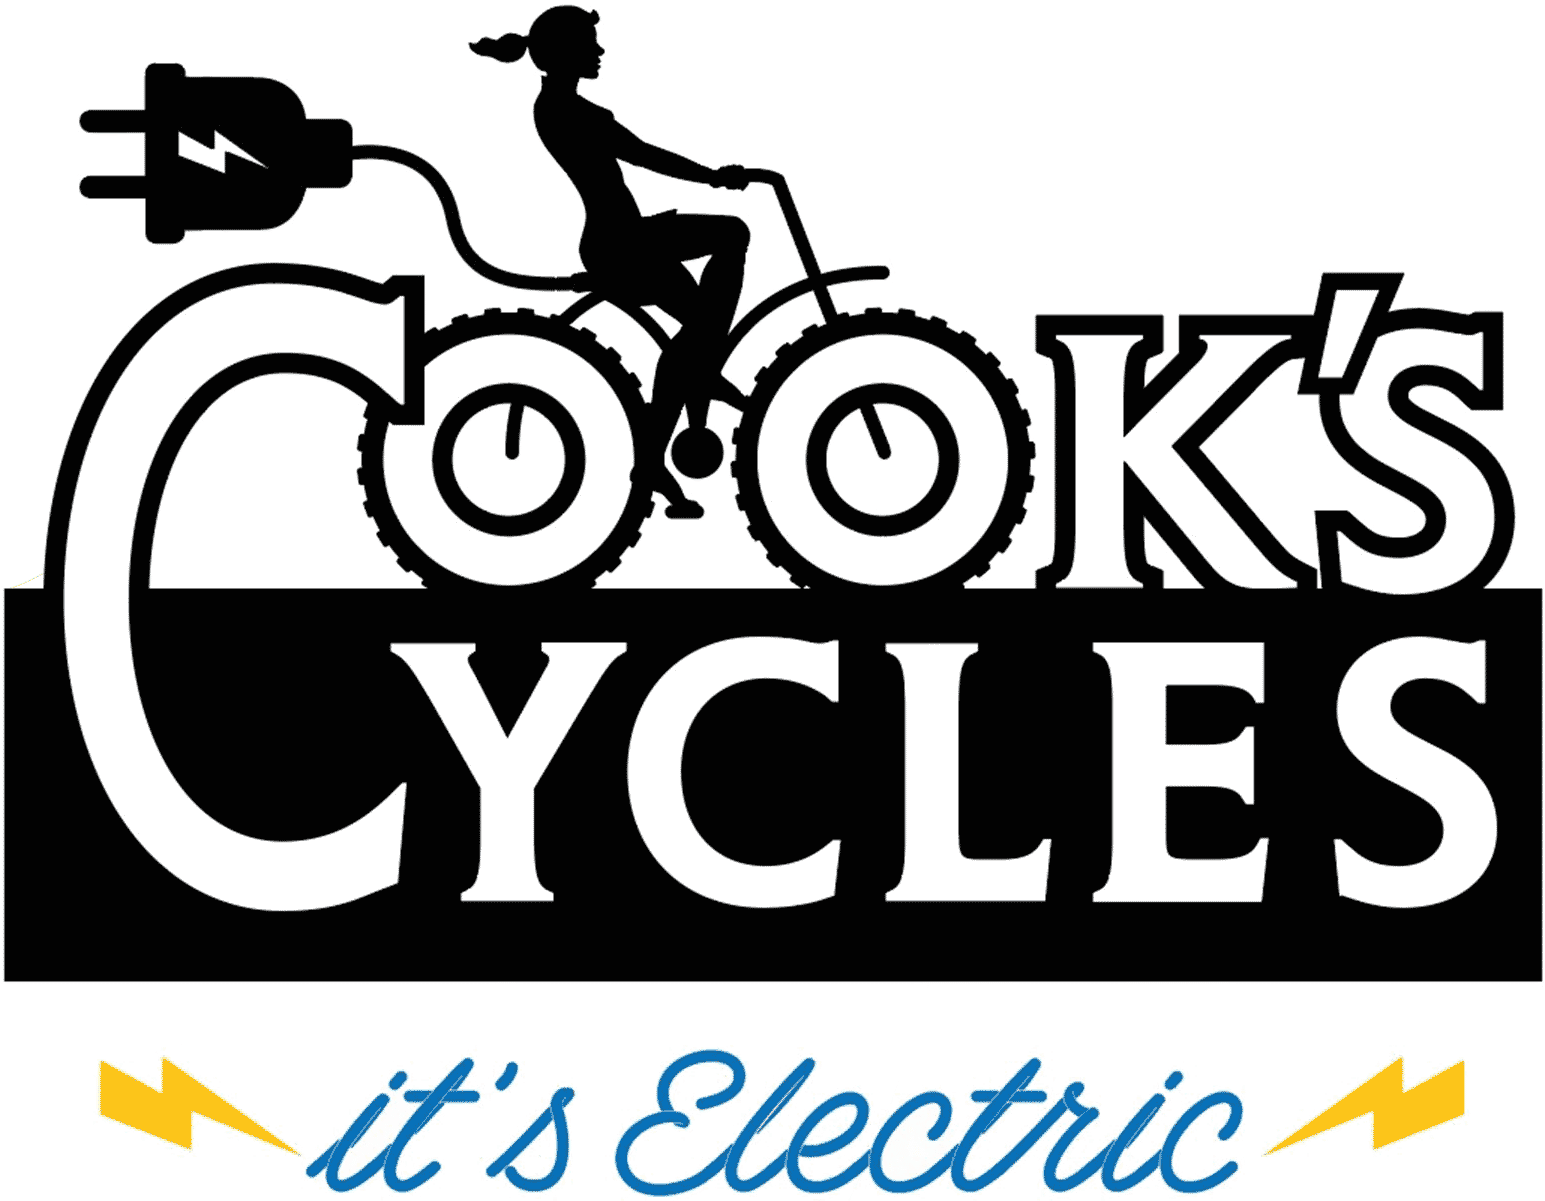 Cook's Cycles on Nantucekt Island